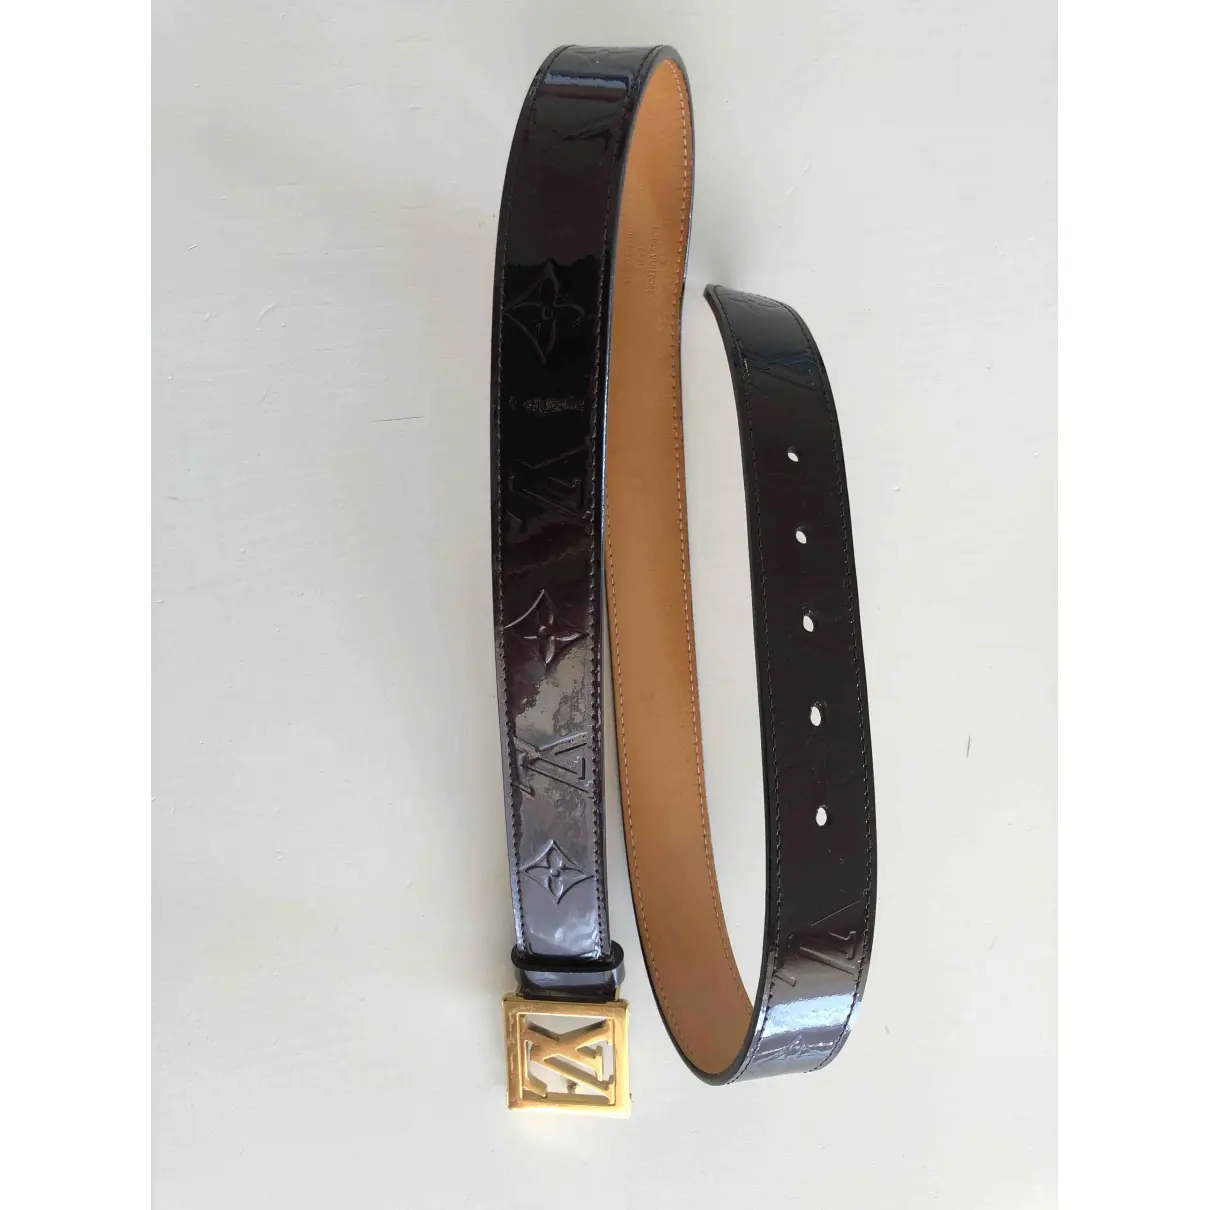 Buy Louis Vuitton Initiales leather belt online